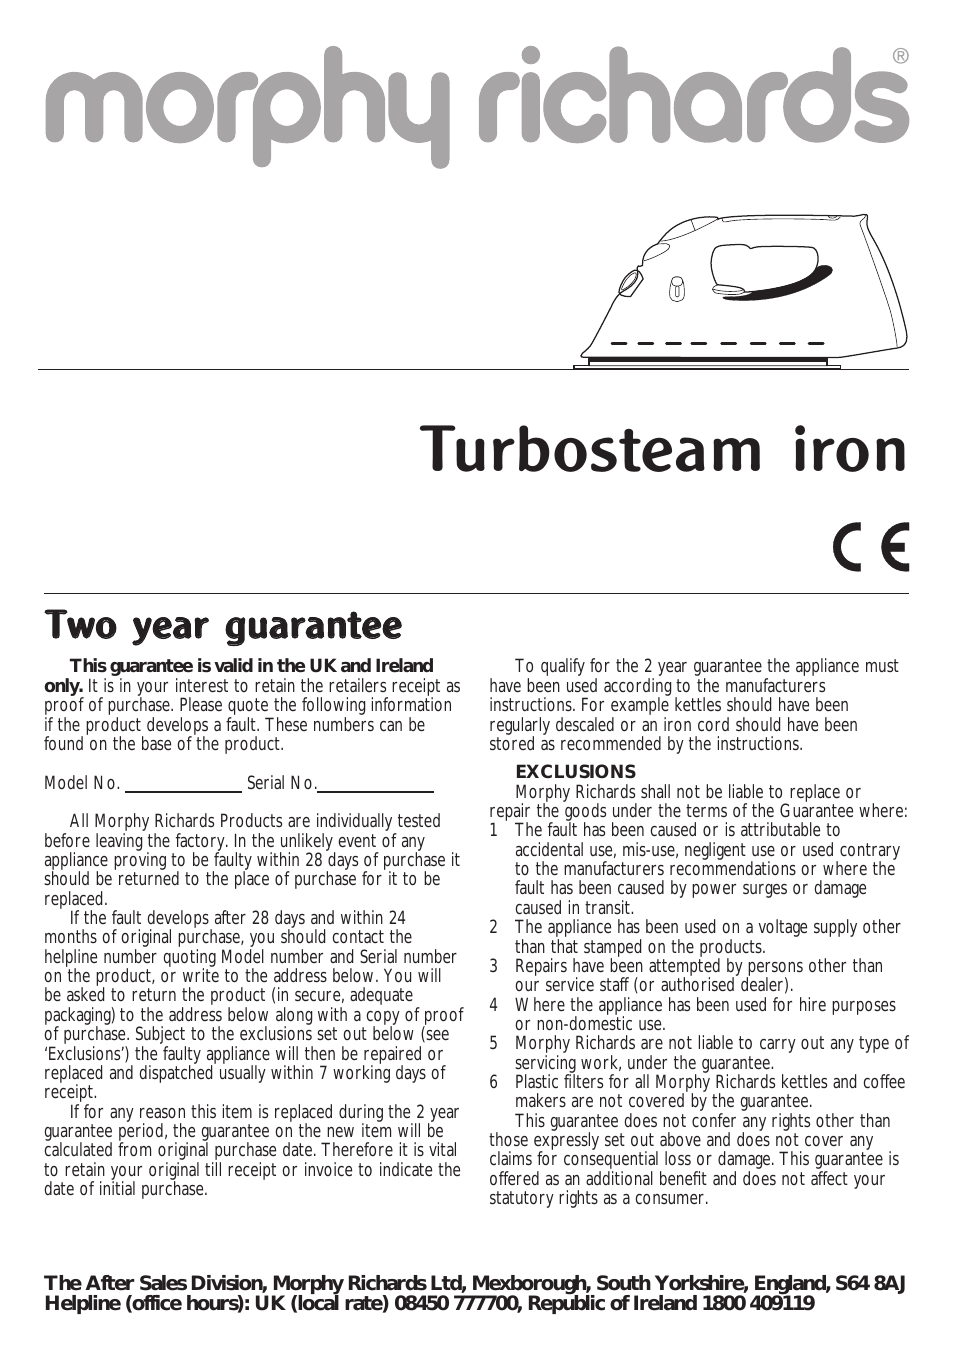 Turbo steam iron